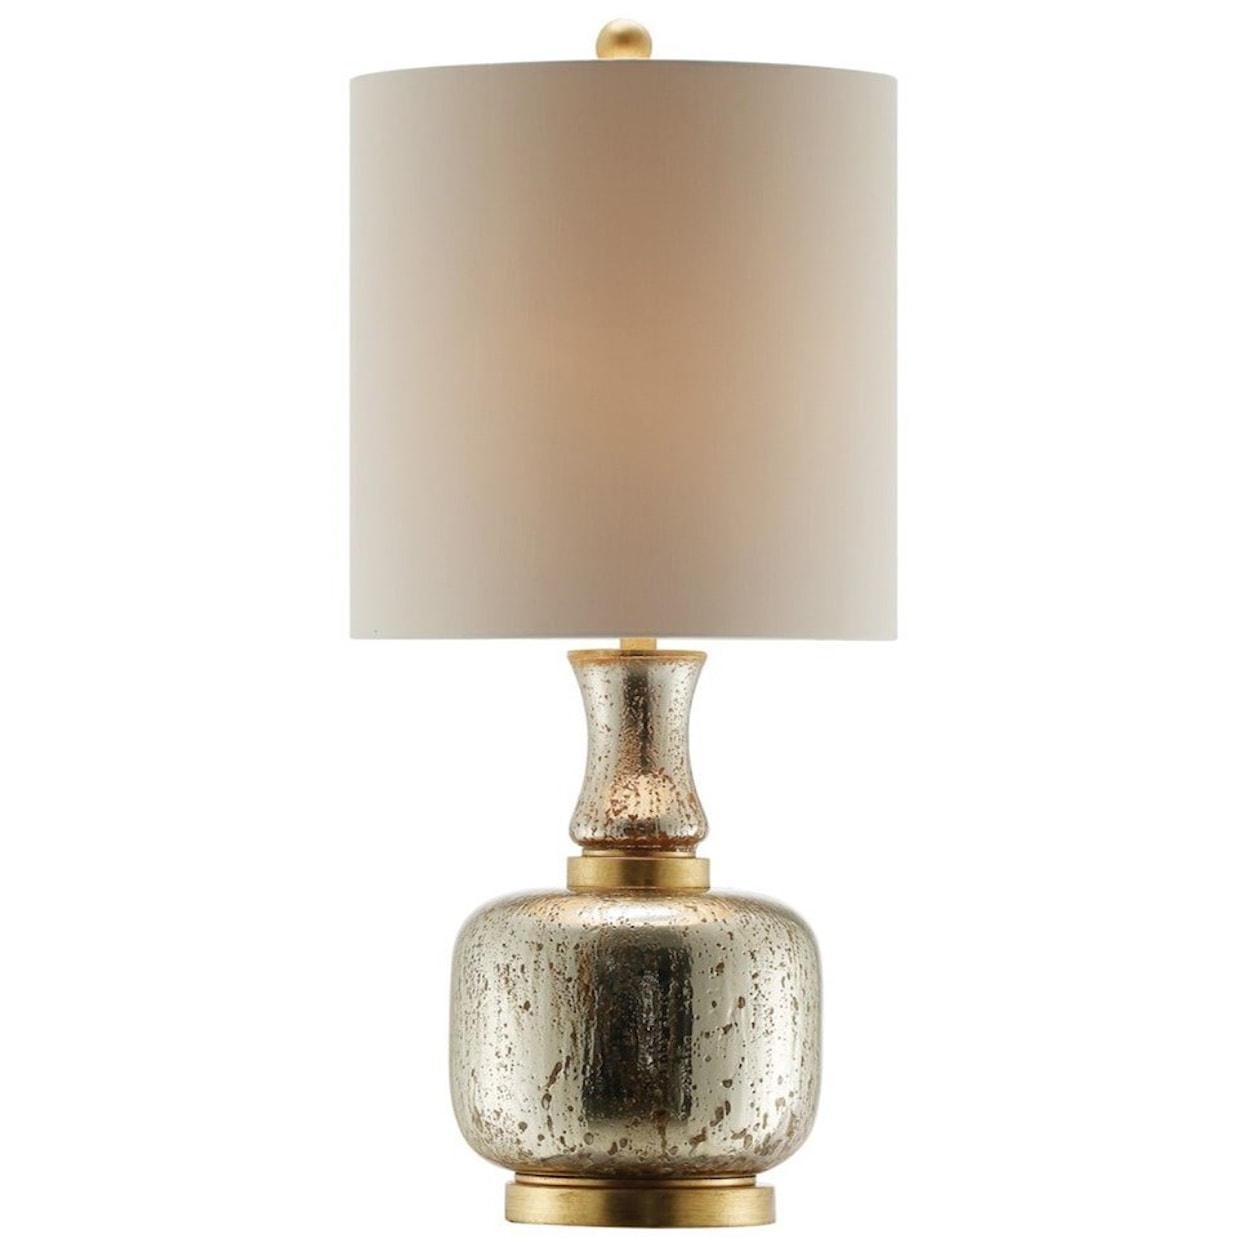 Crestview Collection Lighting Harper Table Lamp